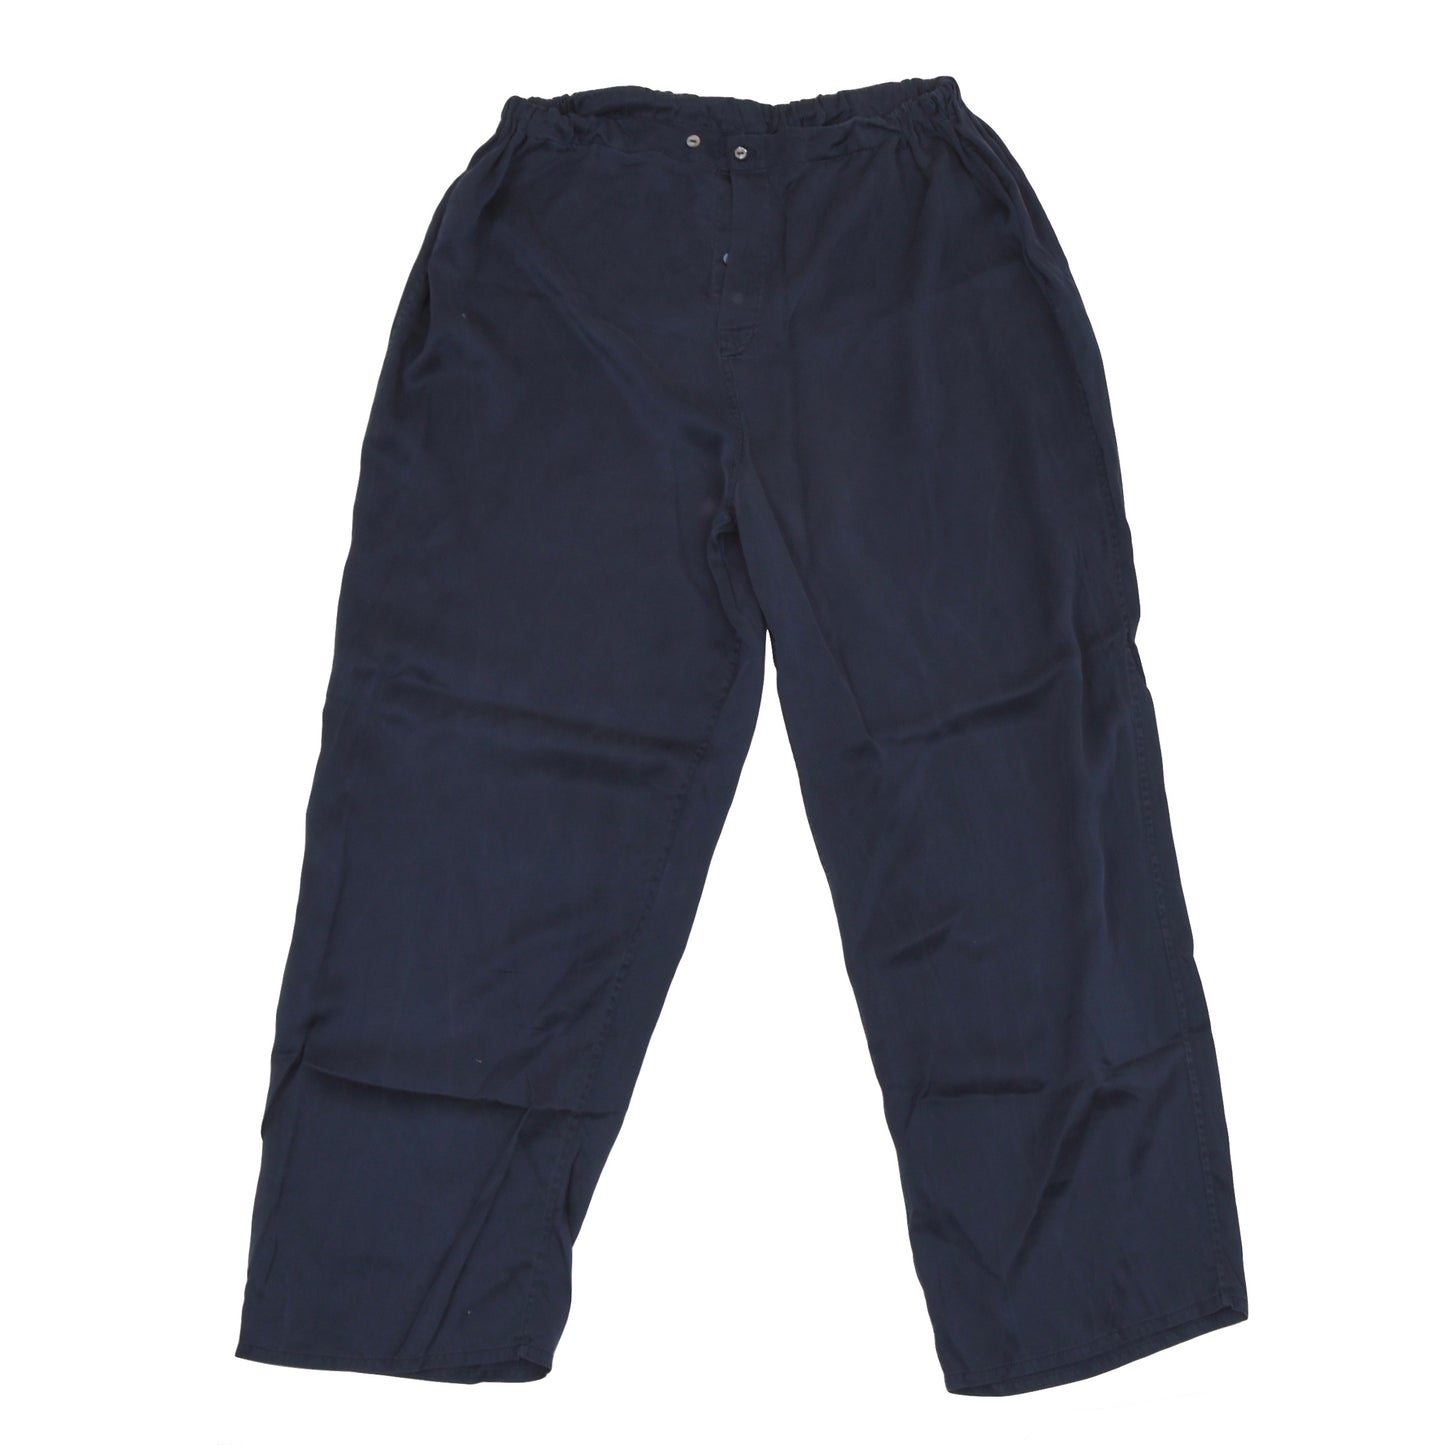 Palmers 100% Silk Pyjamas Size L 52-54 - Navy